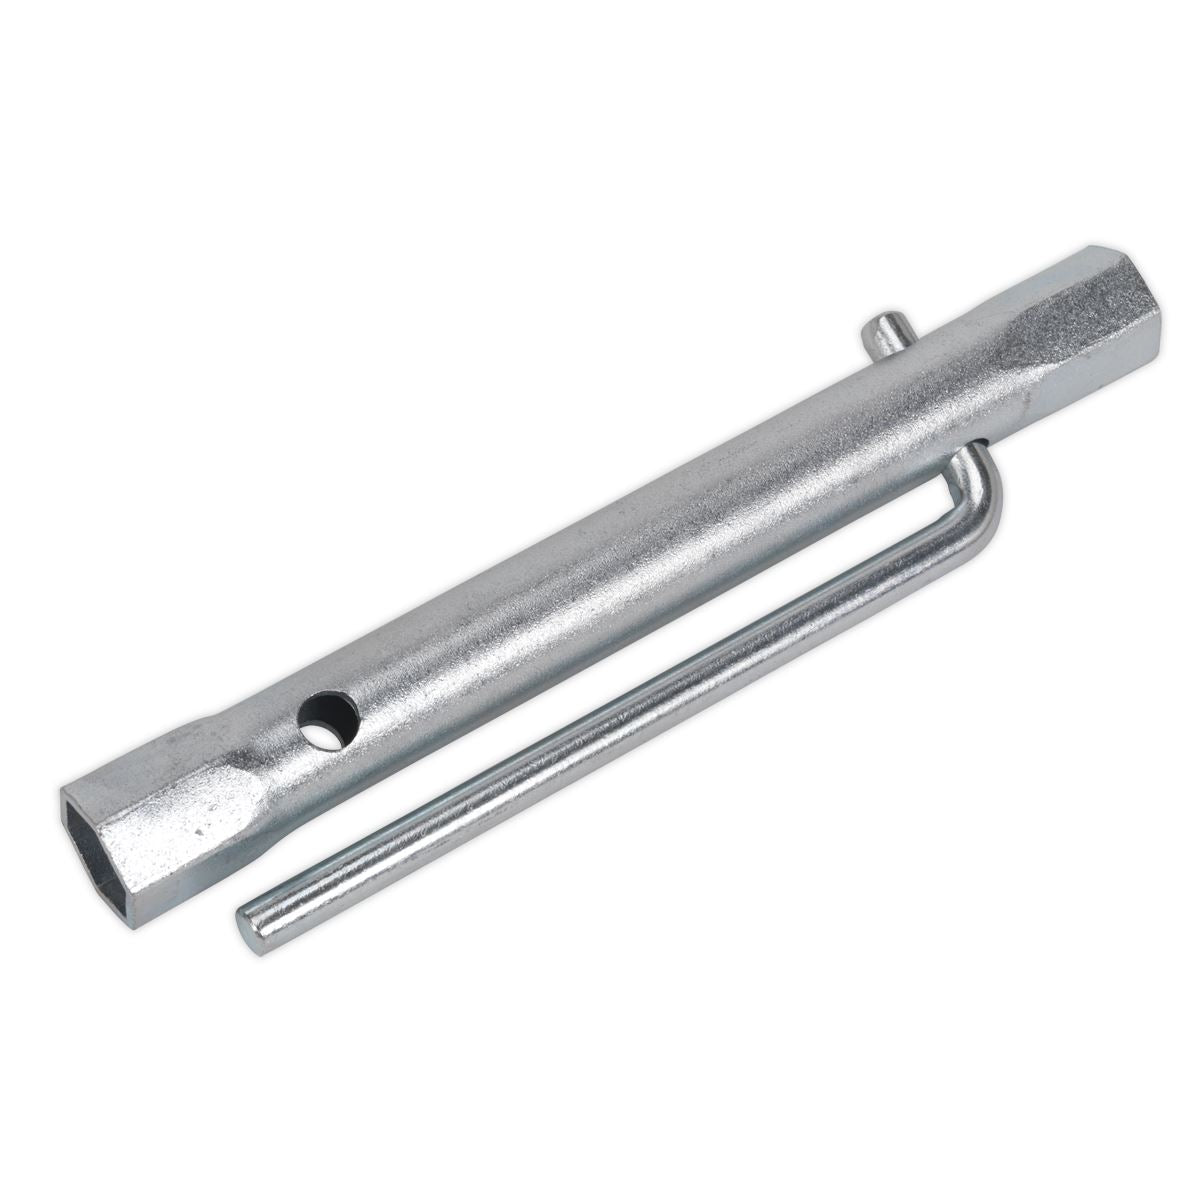 Sealey Long Reach Double End Spark Plug Box Spanner with L-Bar 14/16mm